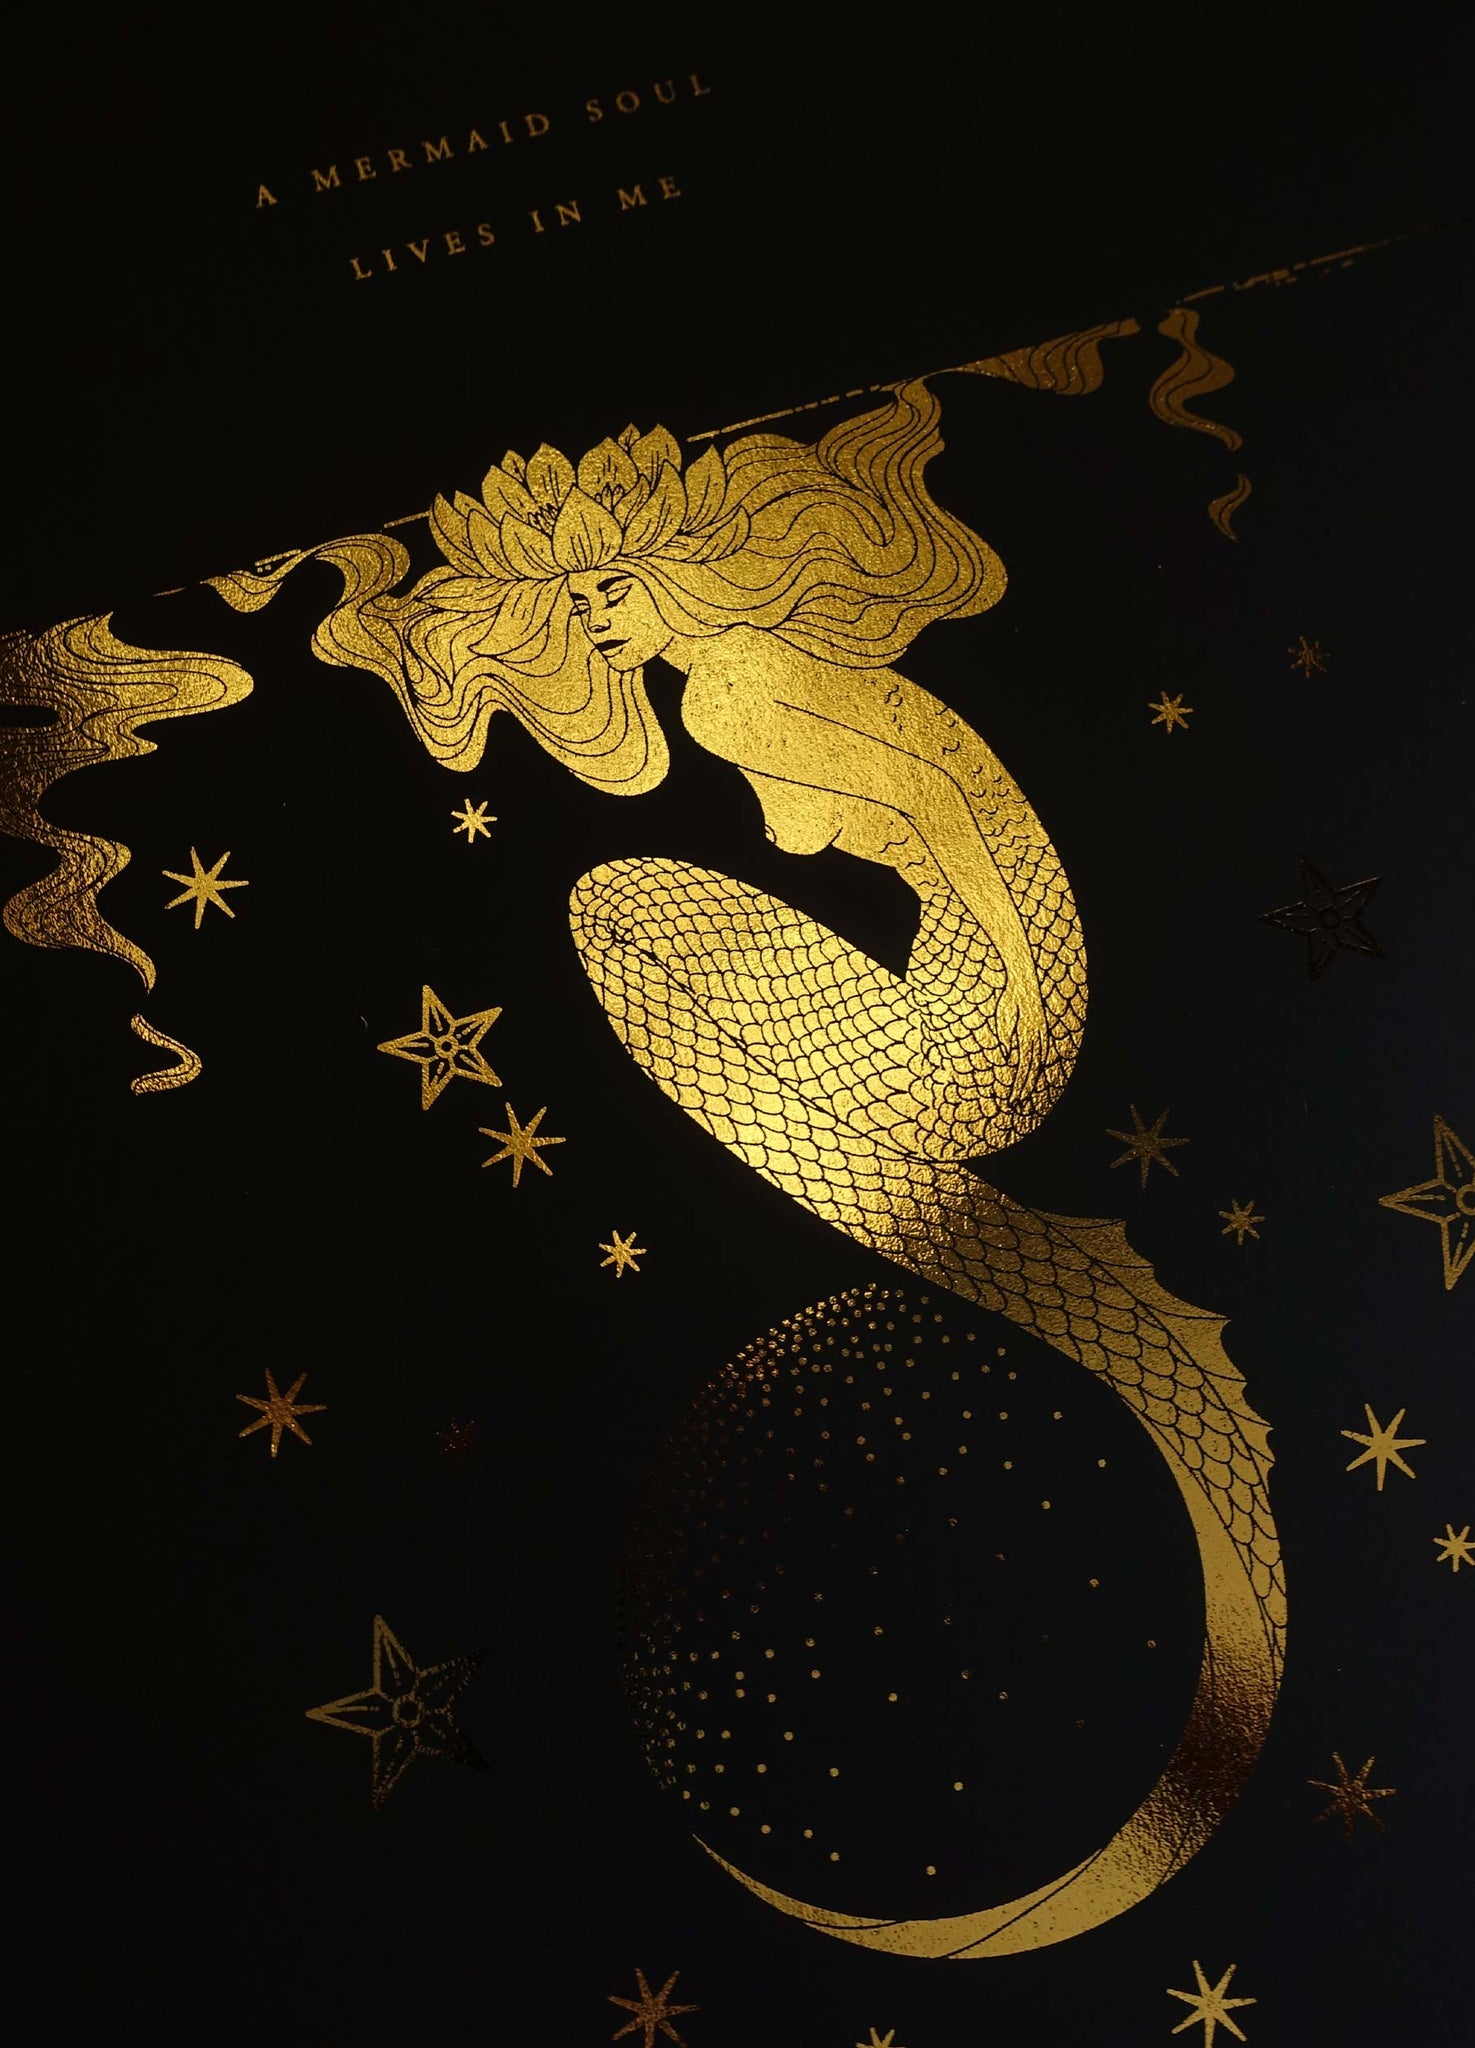 Mermaid Soul gold foil on black paper art print by Cocorrina & Co